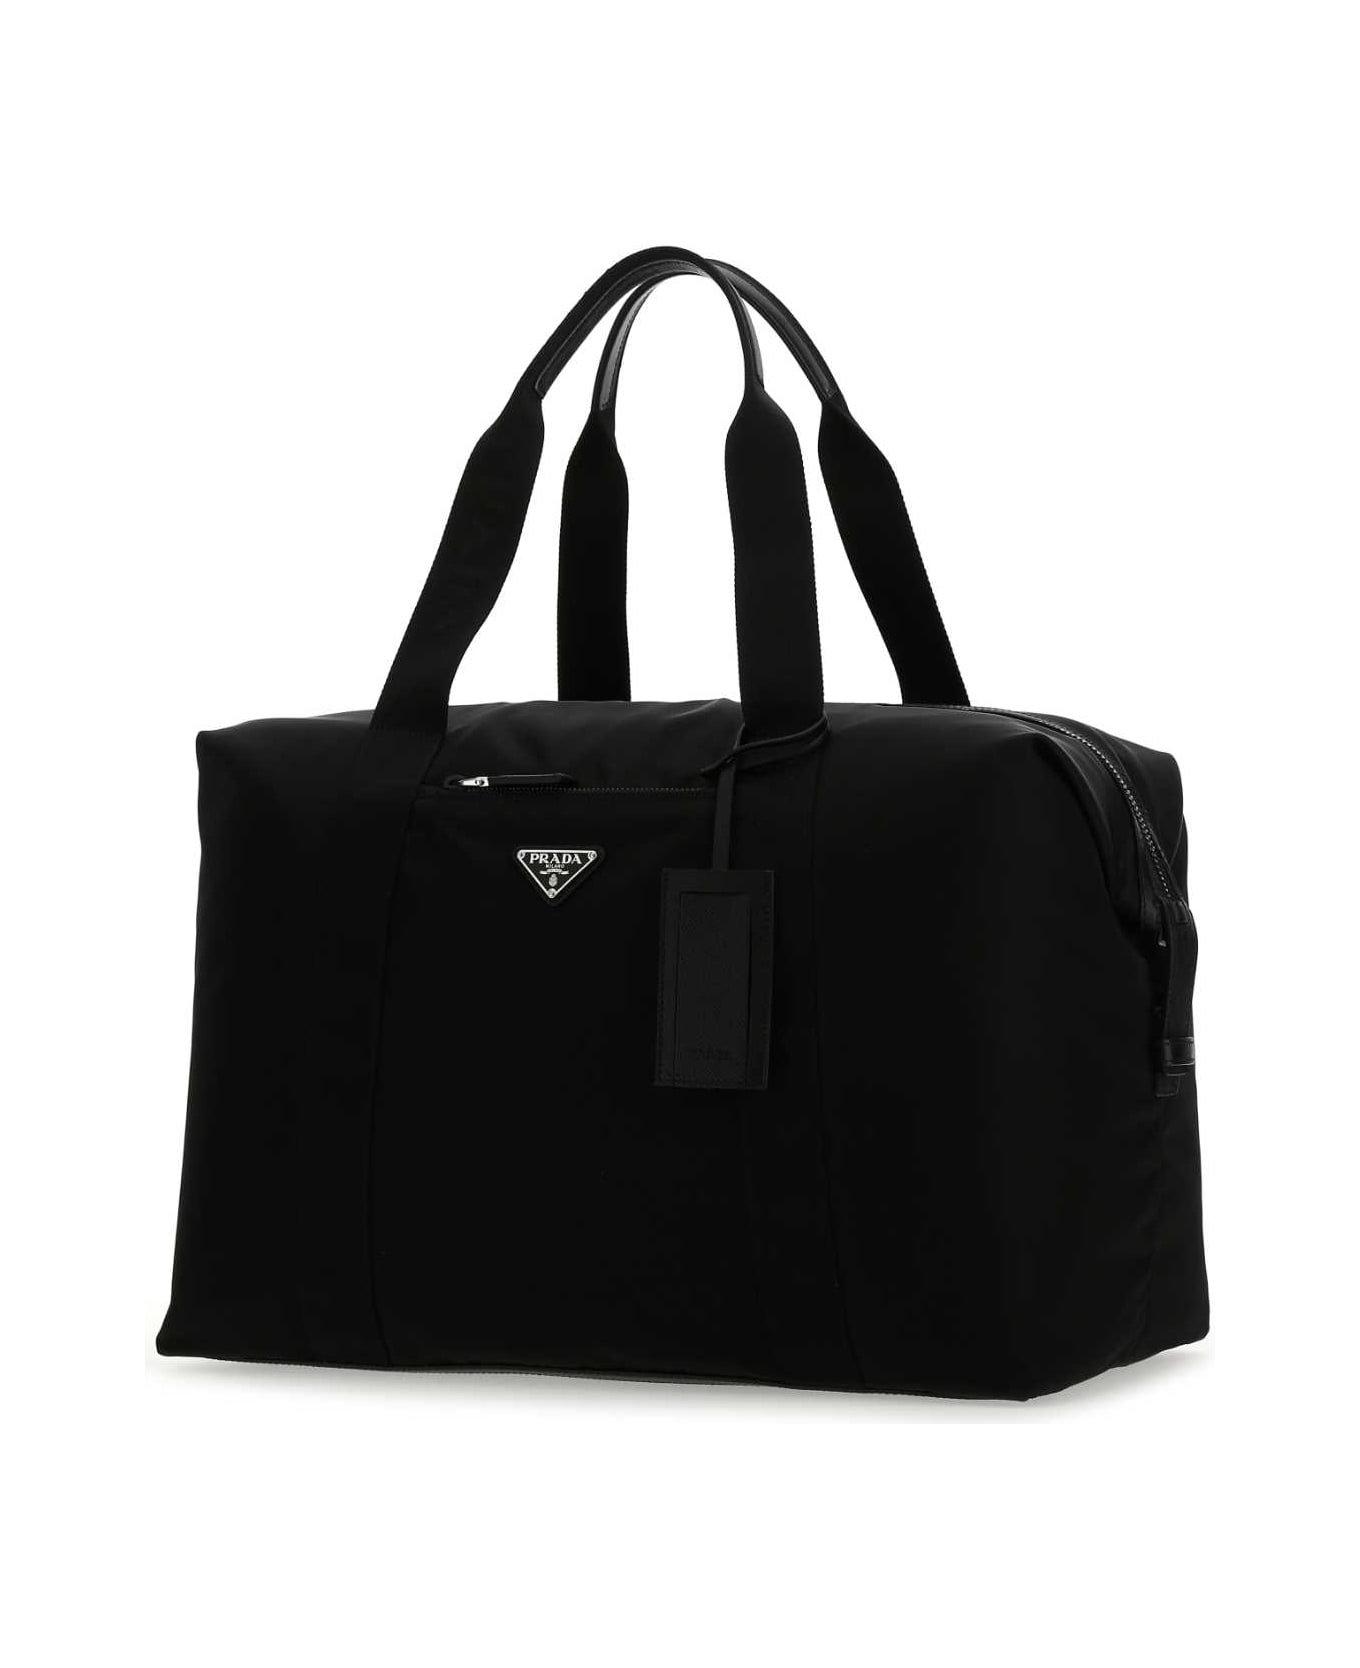 Prada Black Nylon Travel Bag - NERO